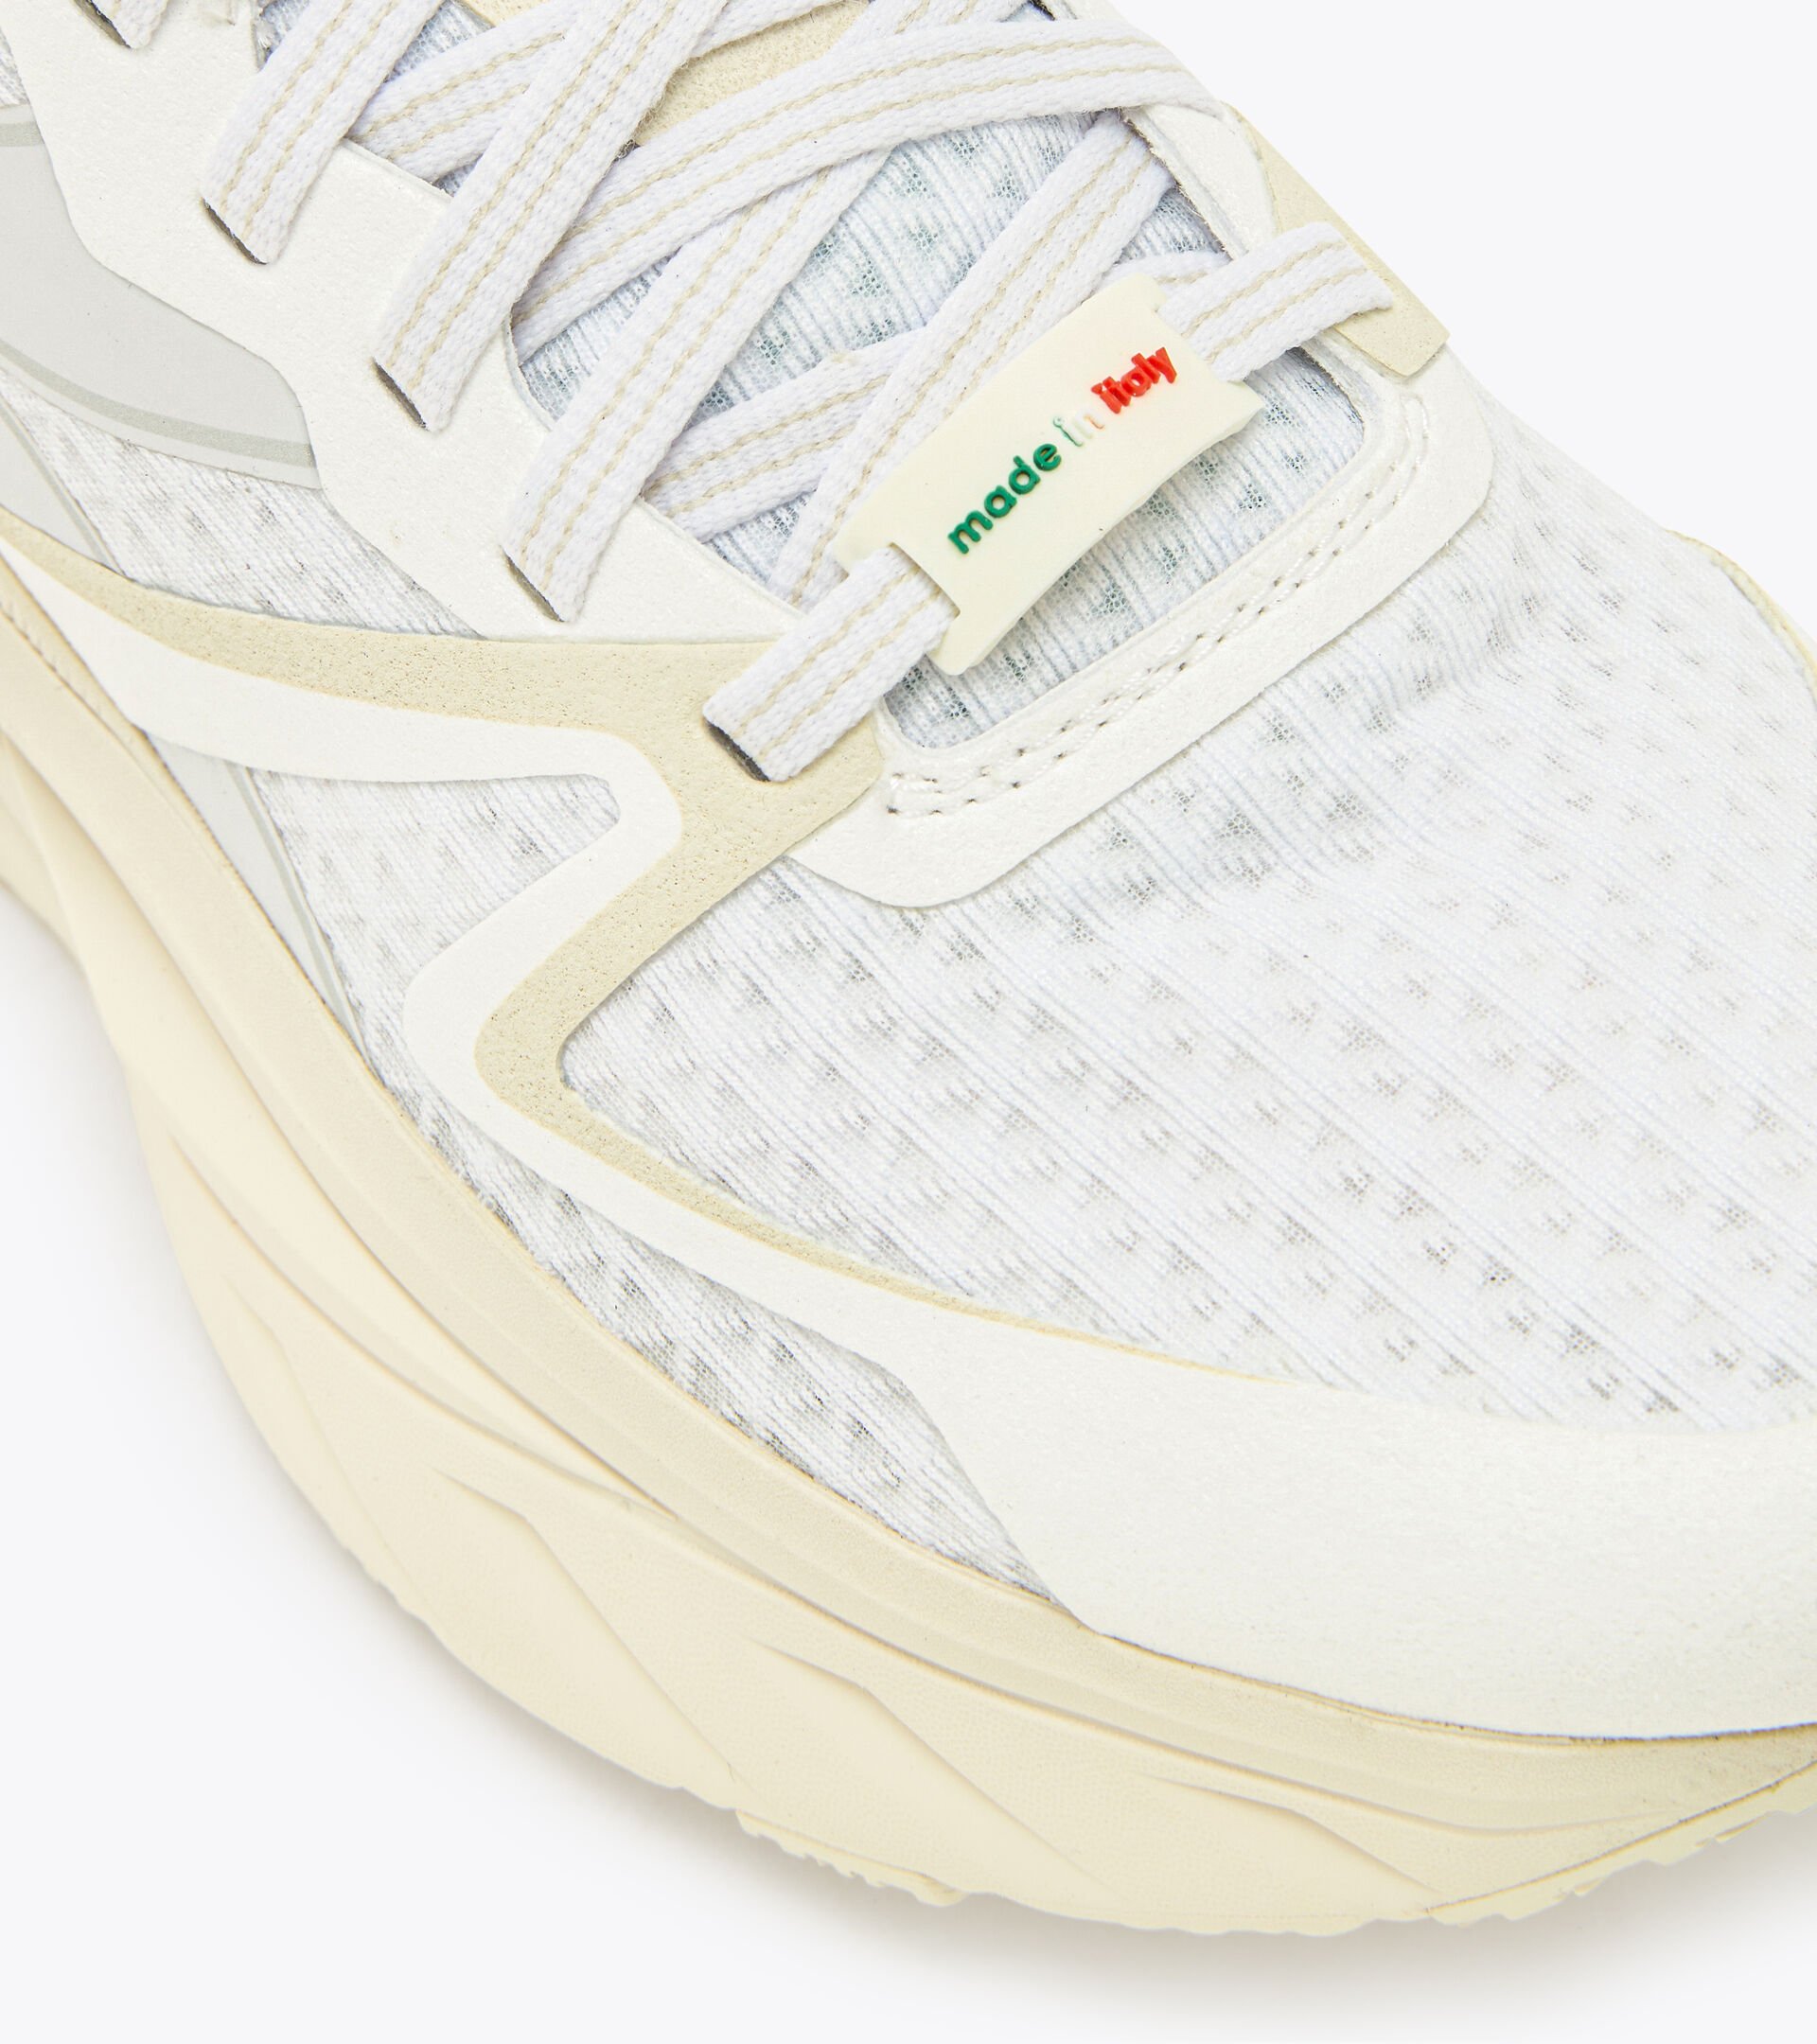 Made in Italy Running shoes - Gender neutral ATOMO V7000 WHITE/WHITE/WHISPER WHITE - Diadora